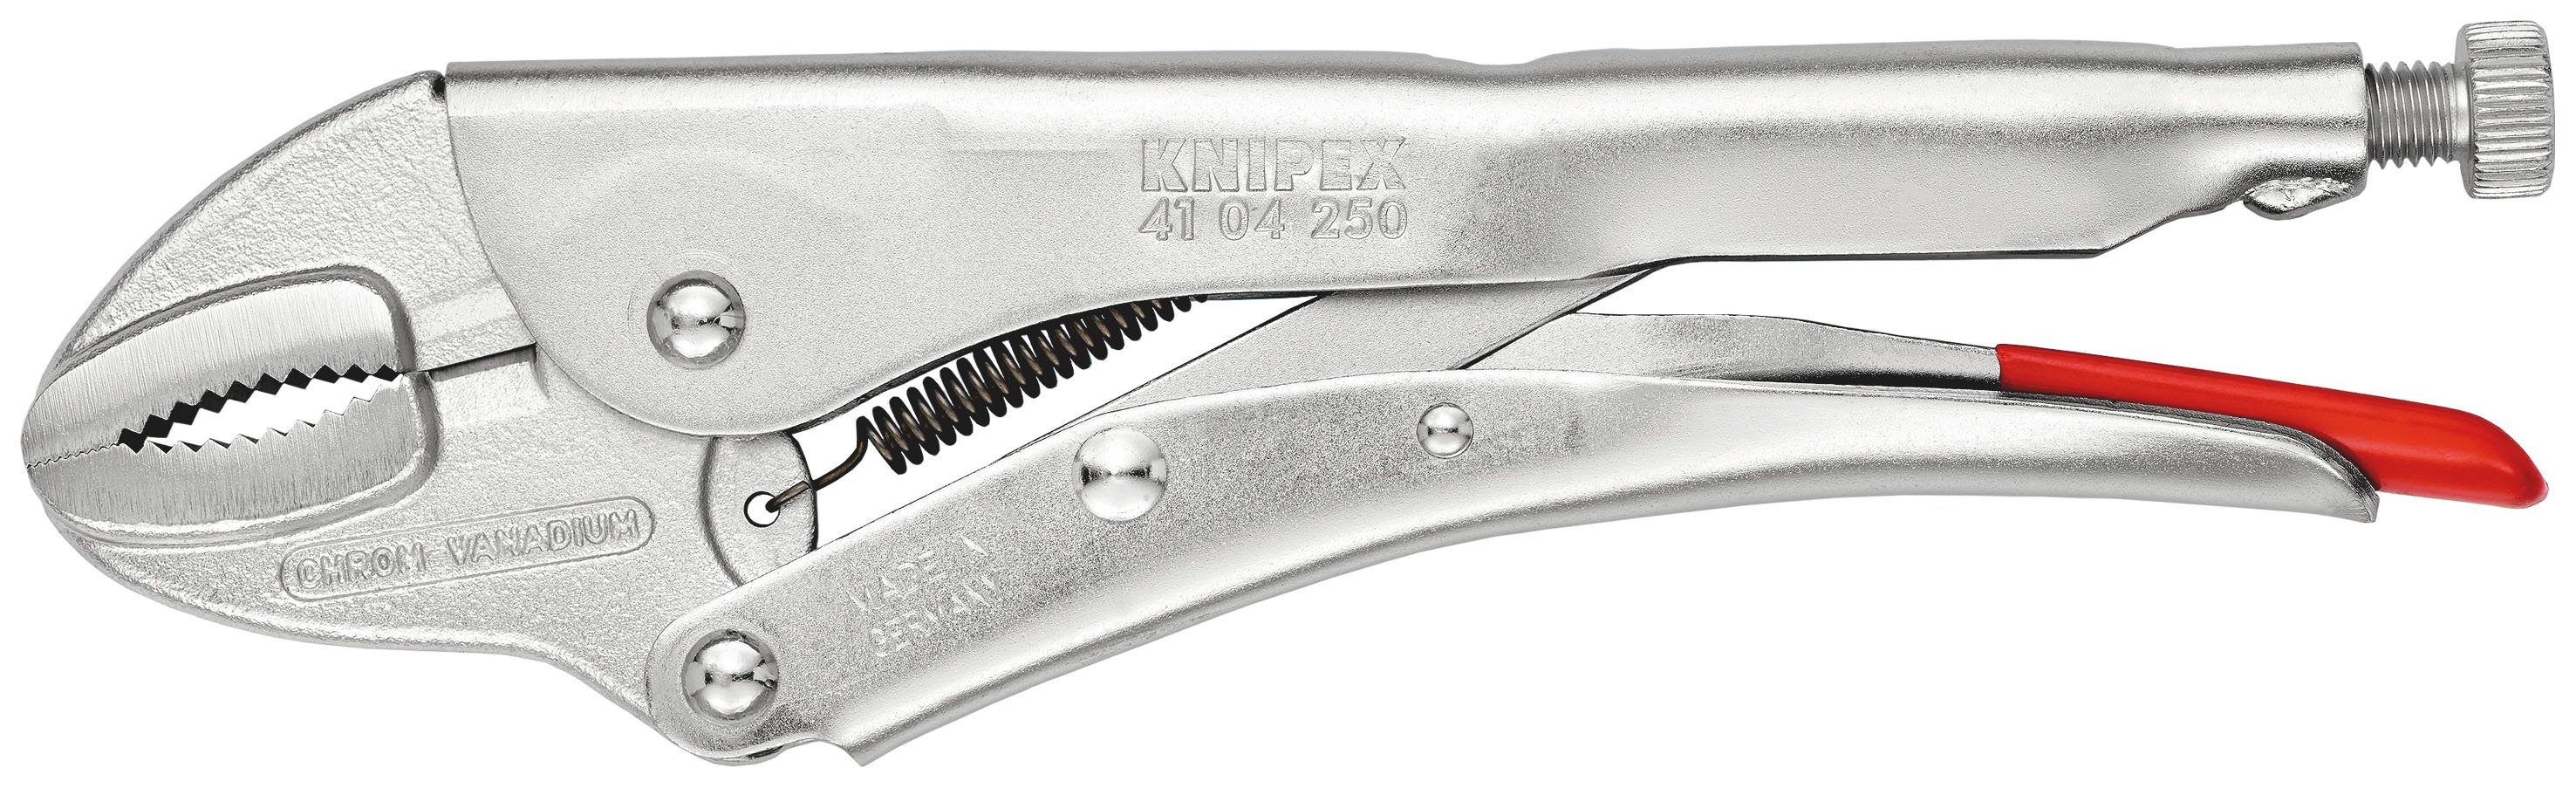 Knipex Gripzange 41 04 250 EAN, 1-tlg., verzinkt 250 mm